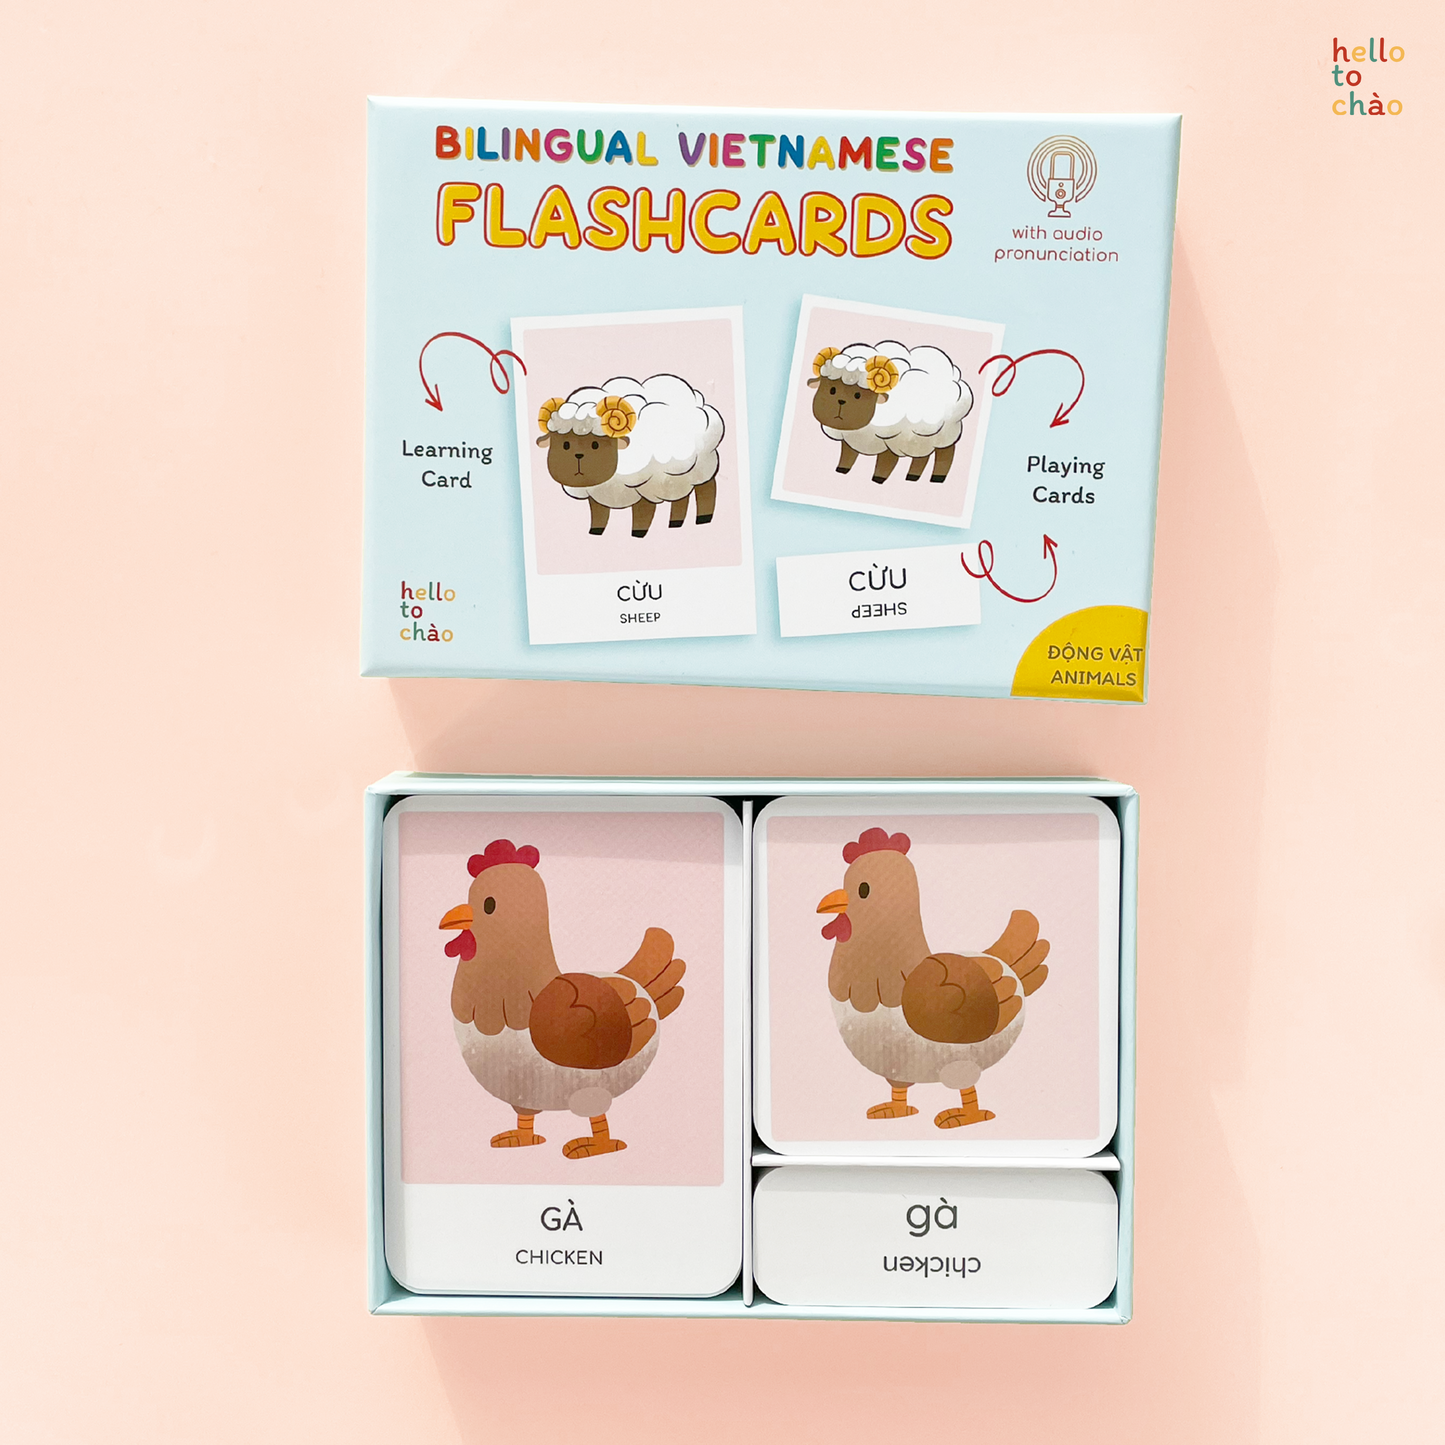 Animal Flashcards